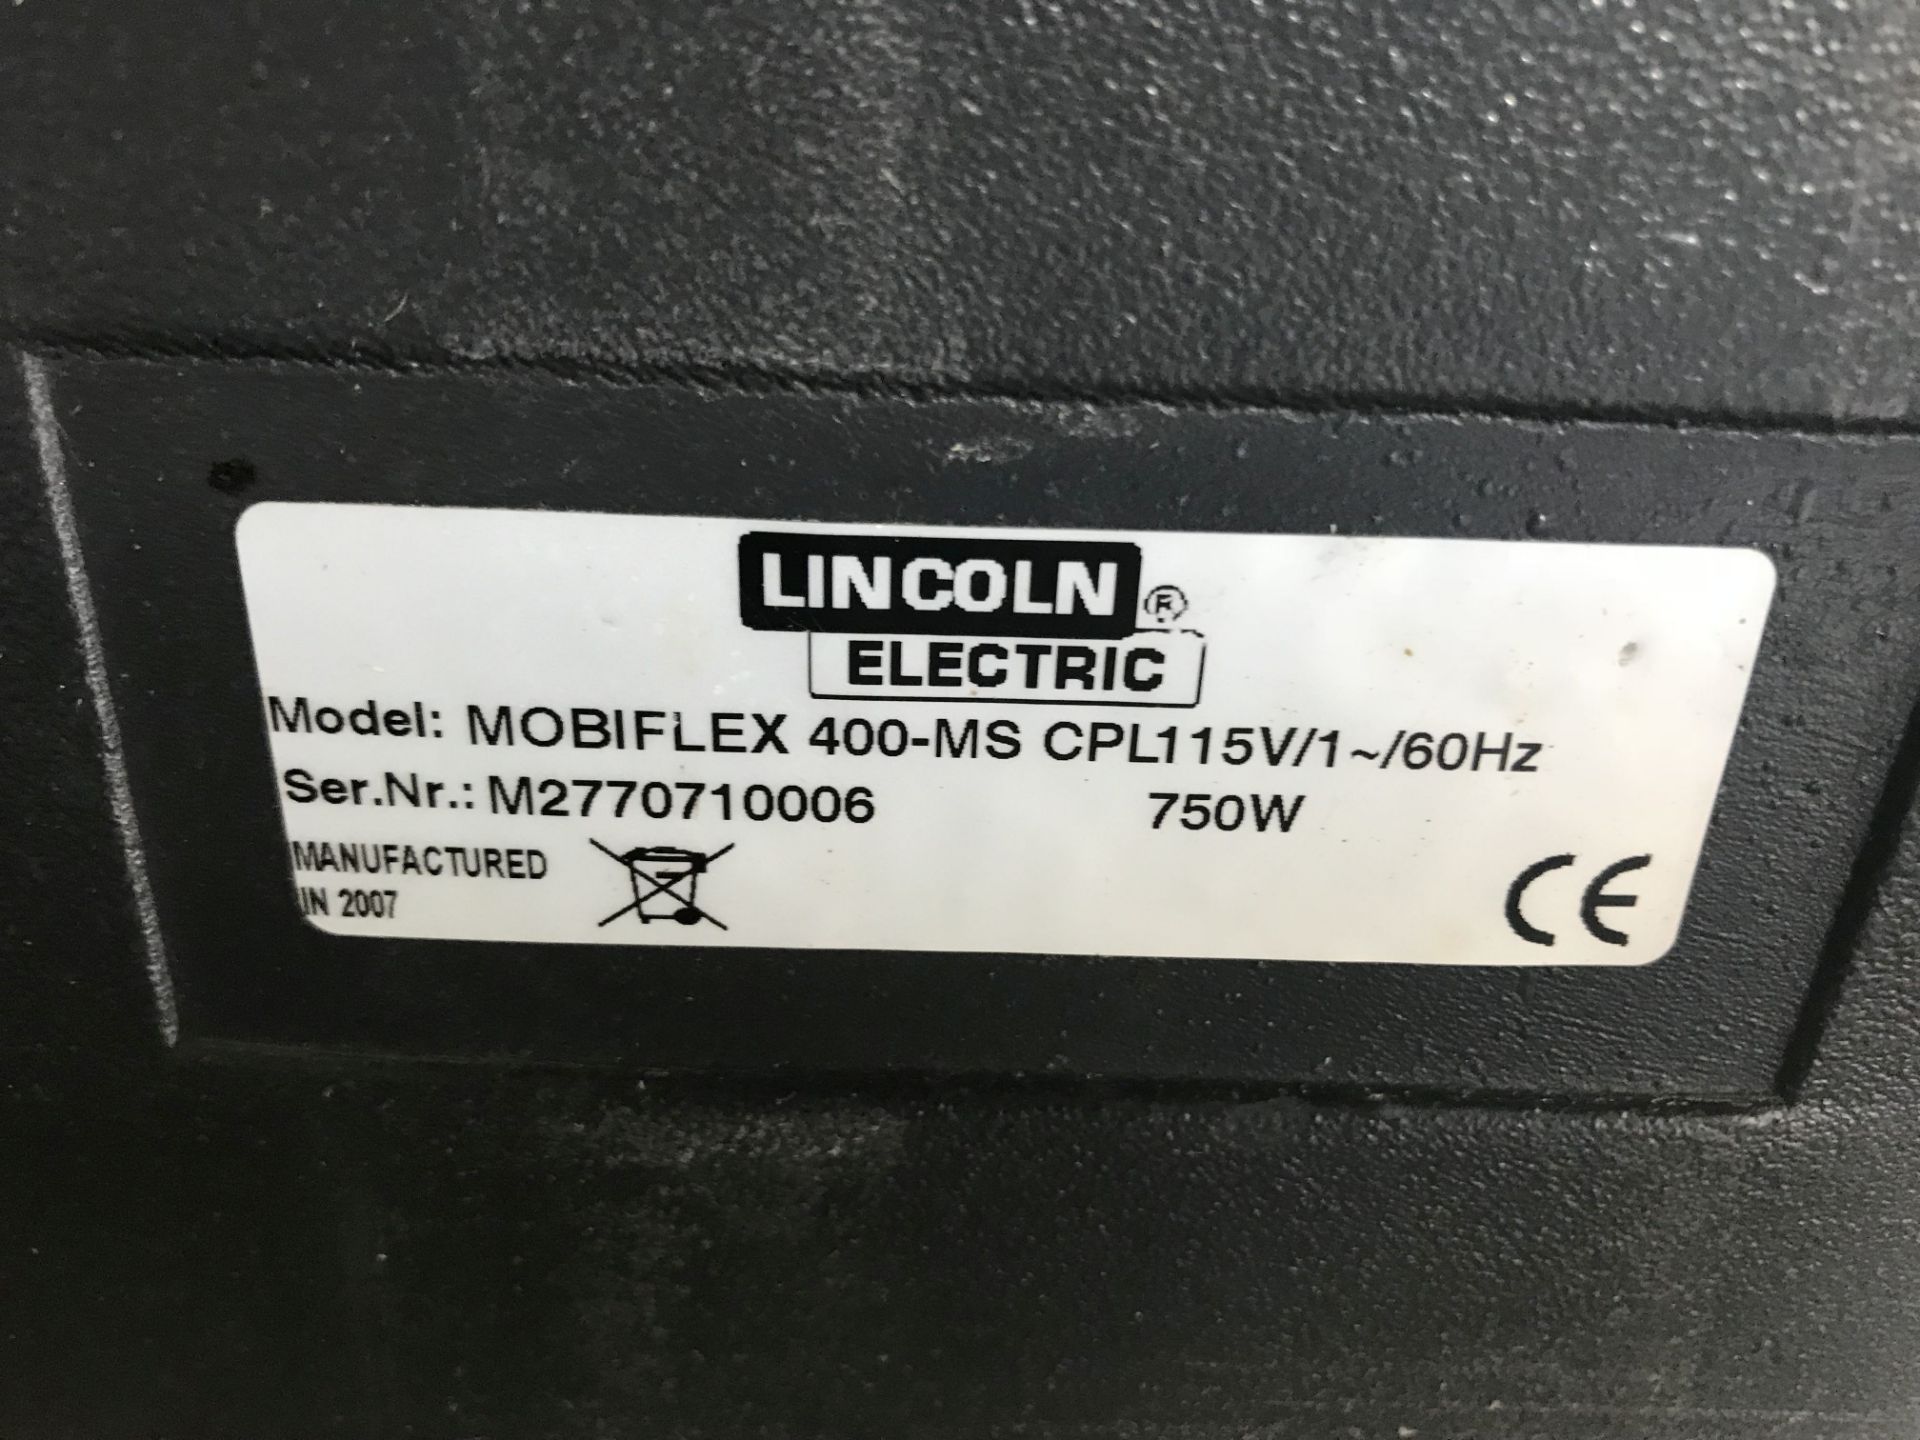 LINCOLN MODEL MOBIFLEX 400-MS PORTABLE FUME COLLECTOR; S/N M2770710006, 750 WATT (NEW 2007) **LOCA - Image 3 of 6